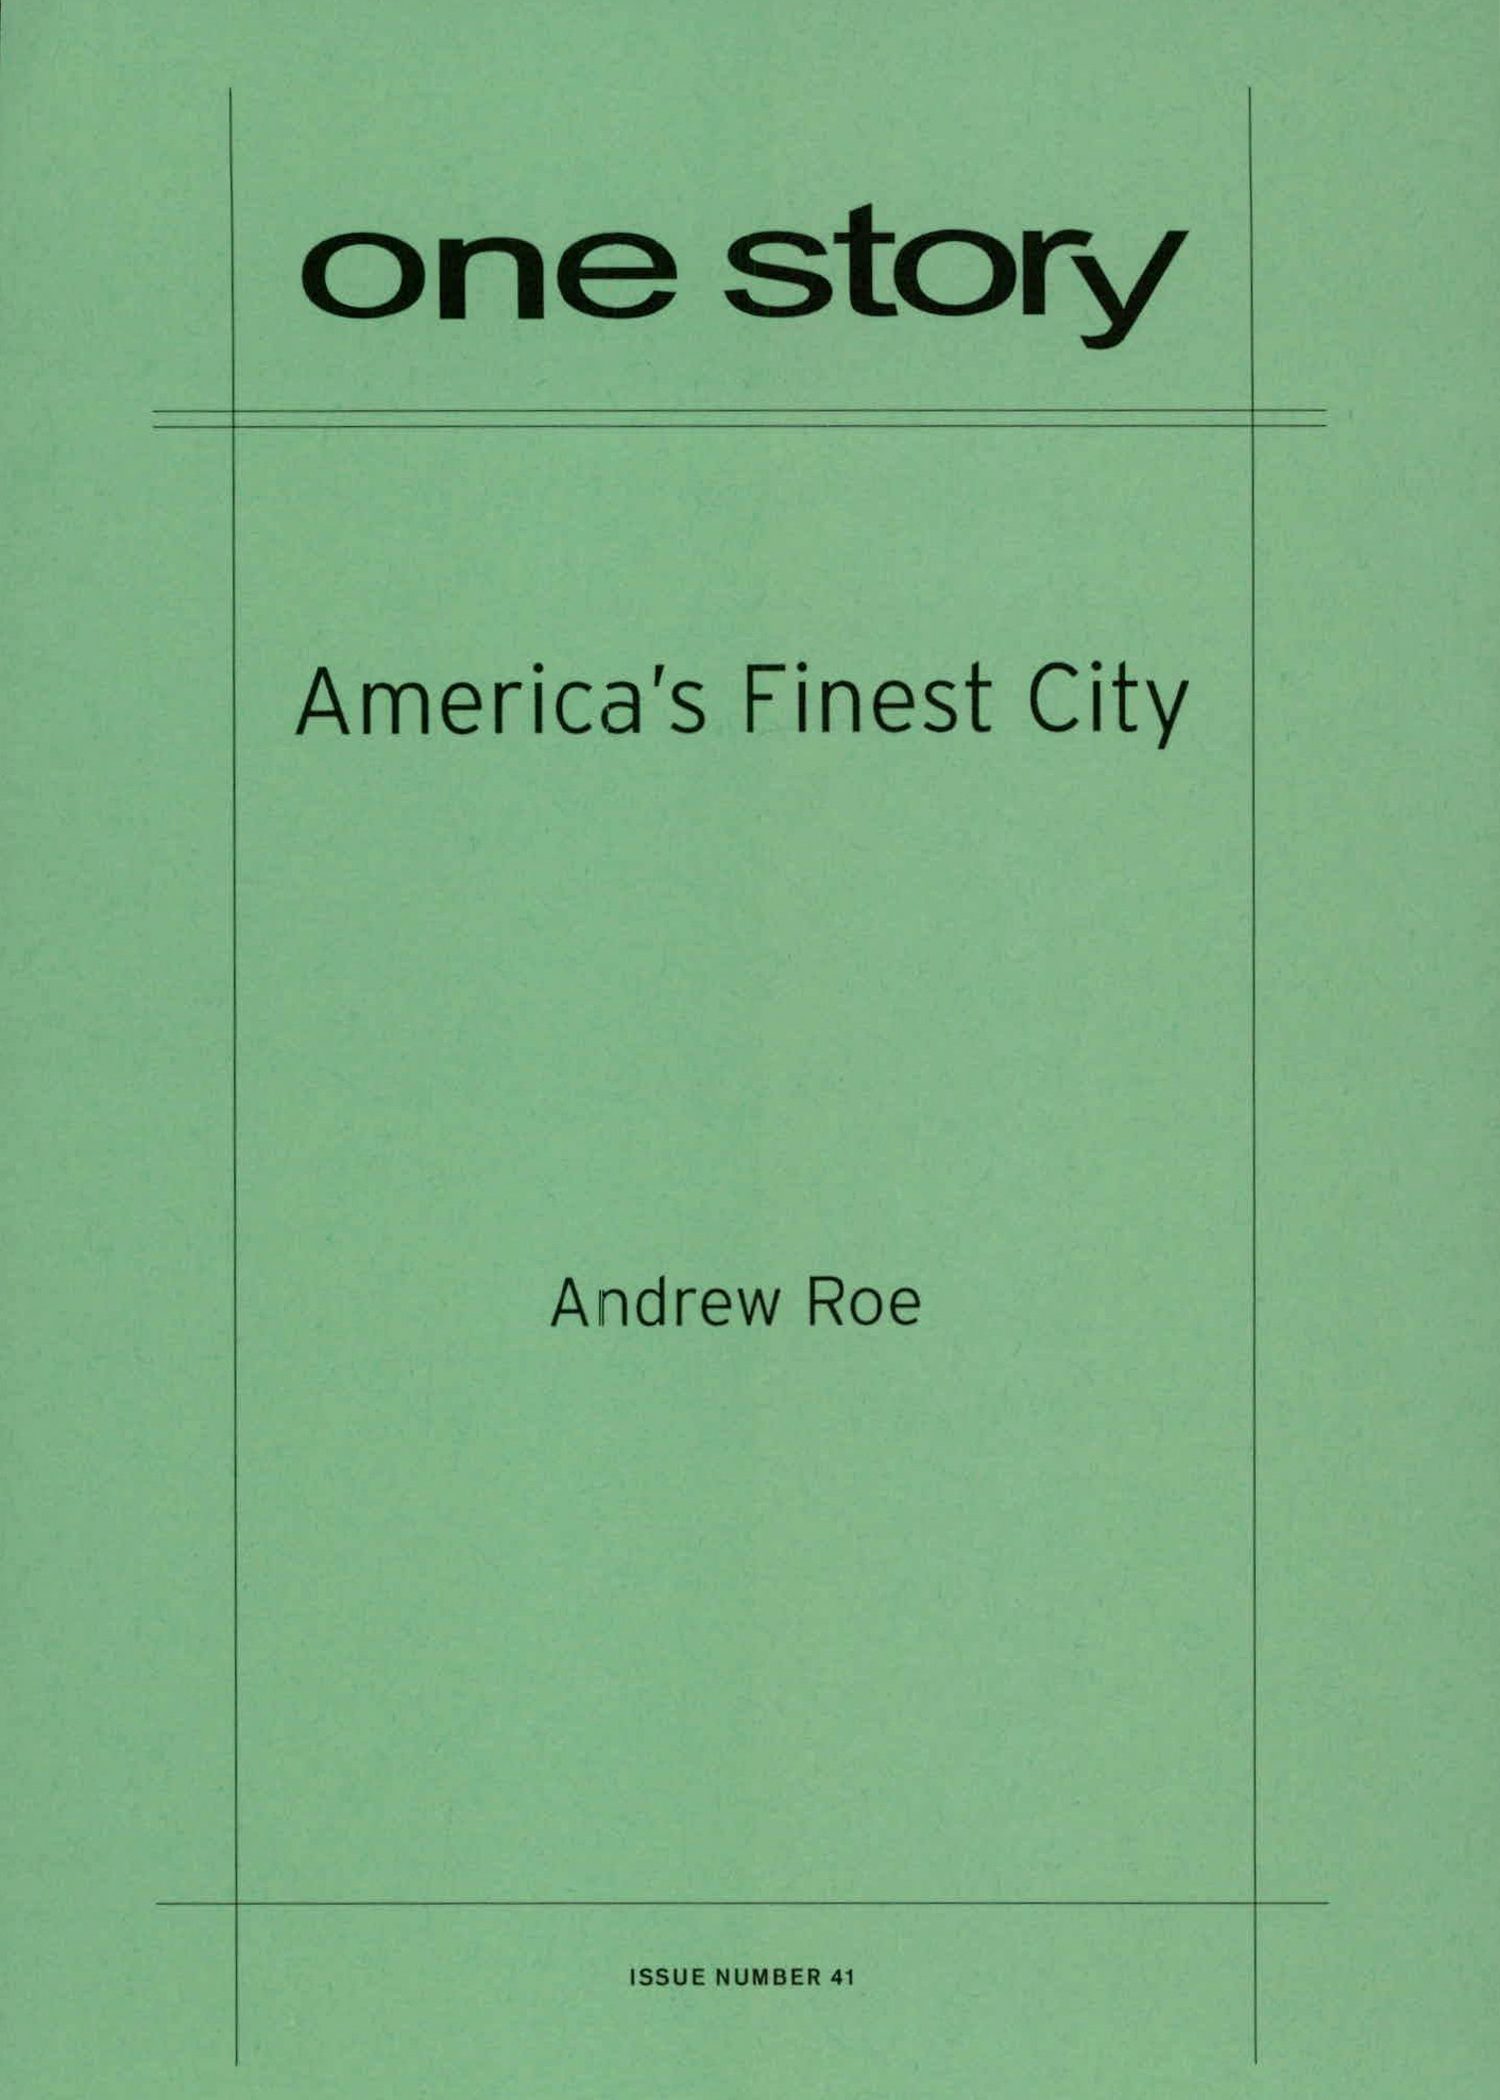 America’s Finest City